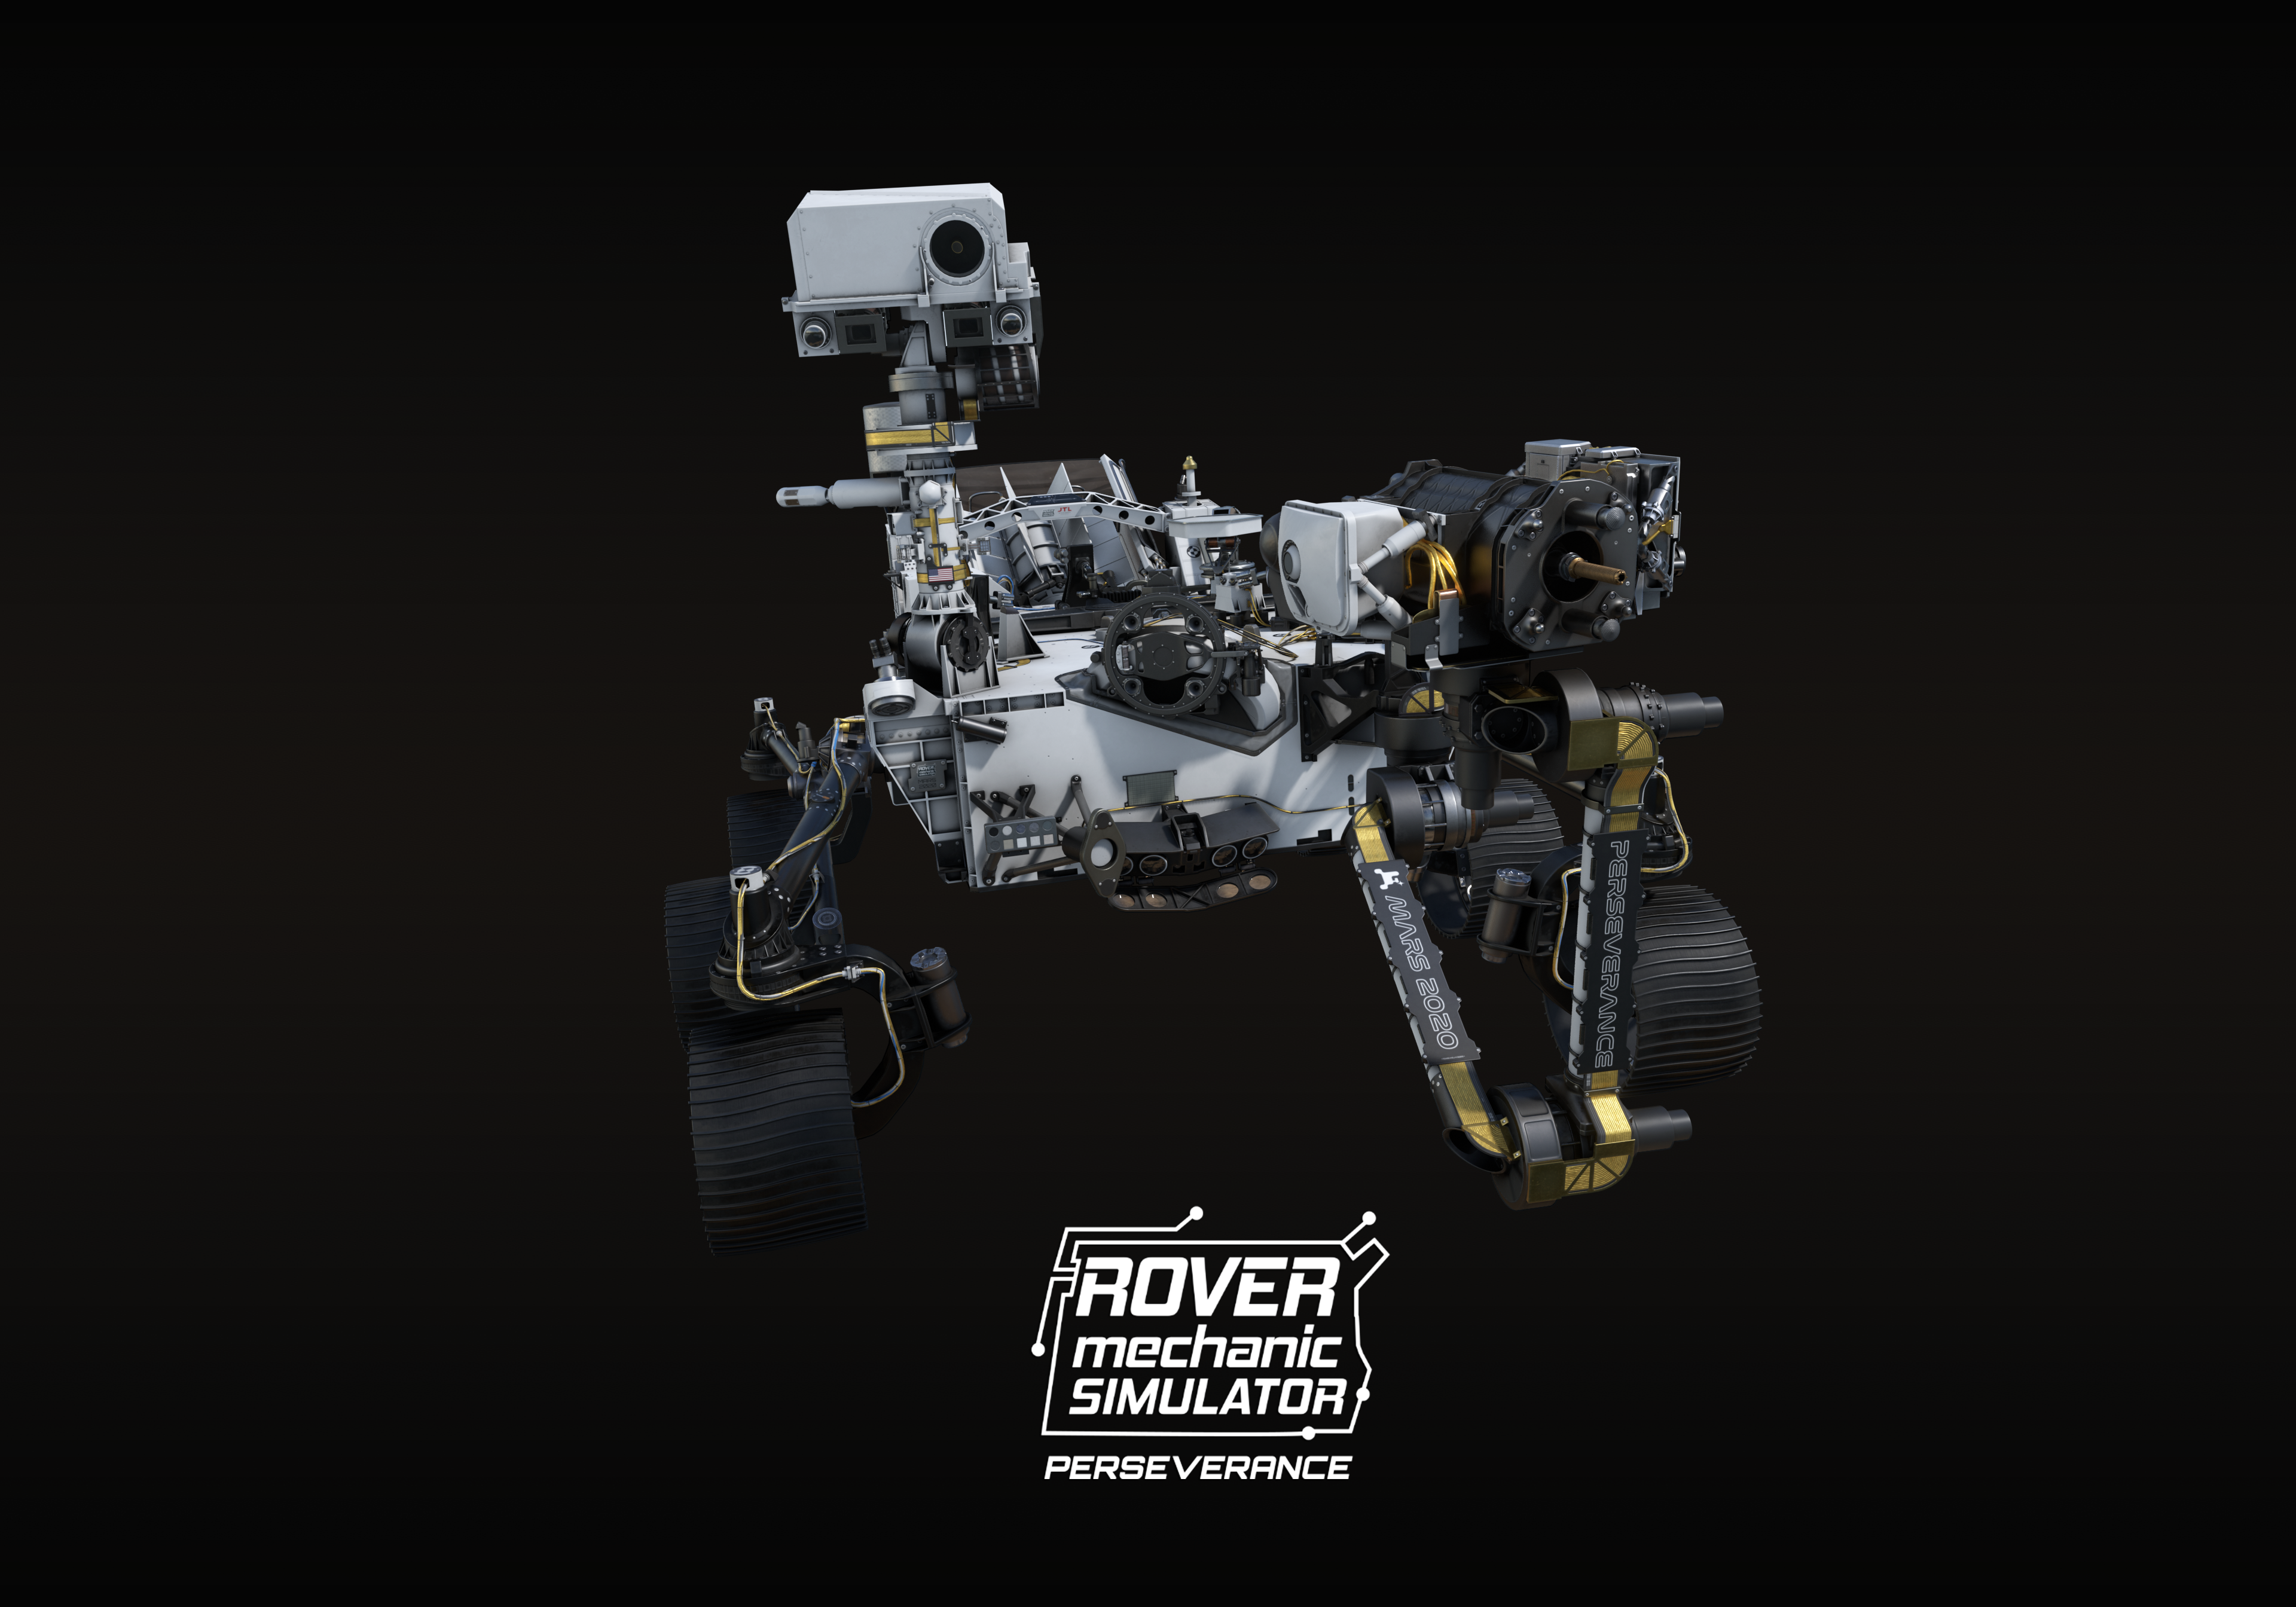 General 3840x2688 Perseverance (Mars Robot) mars rover robot NASA JPL (Jet Propulsion Laboratory) video game art